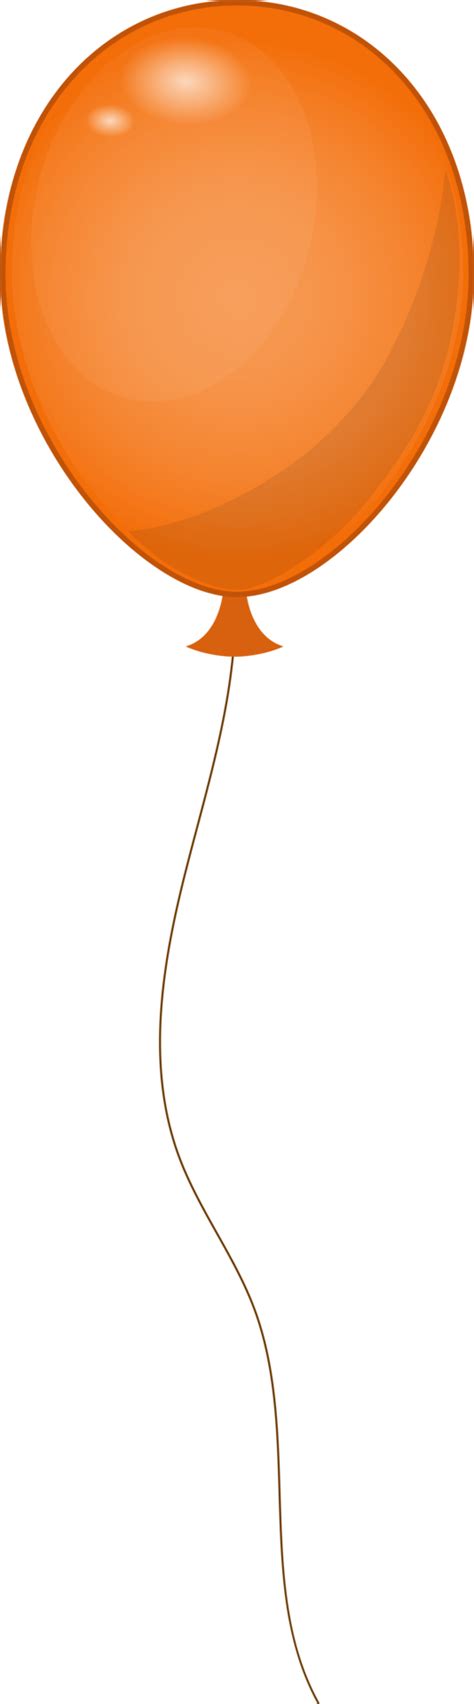 Free Orange Balloon Flat Icon Design 19840577 Png With Transparent